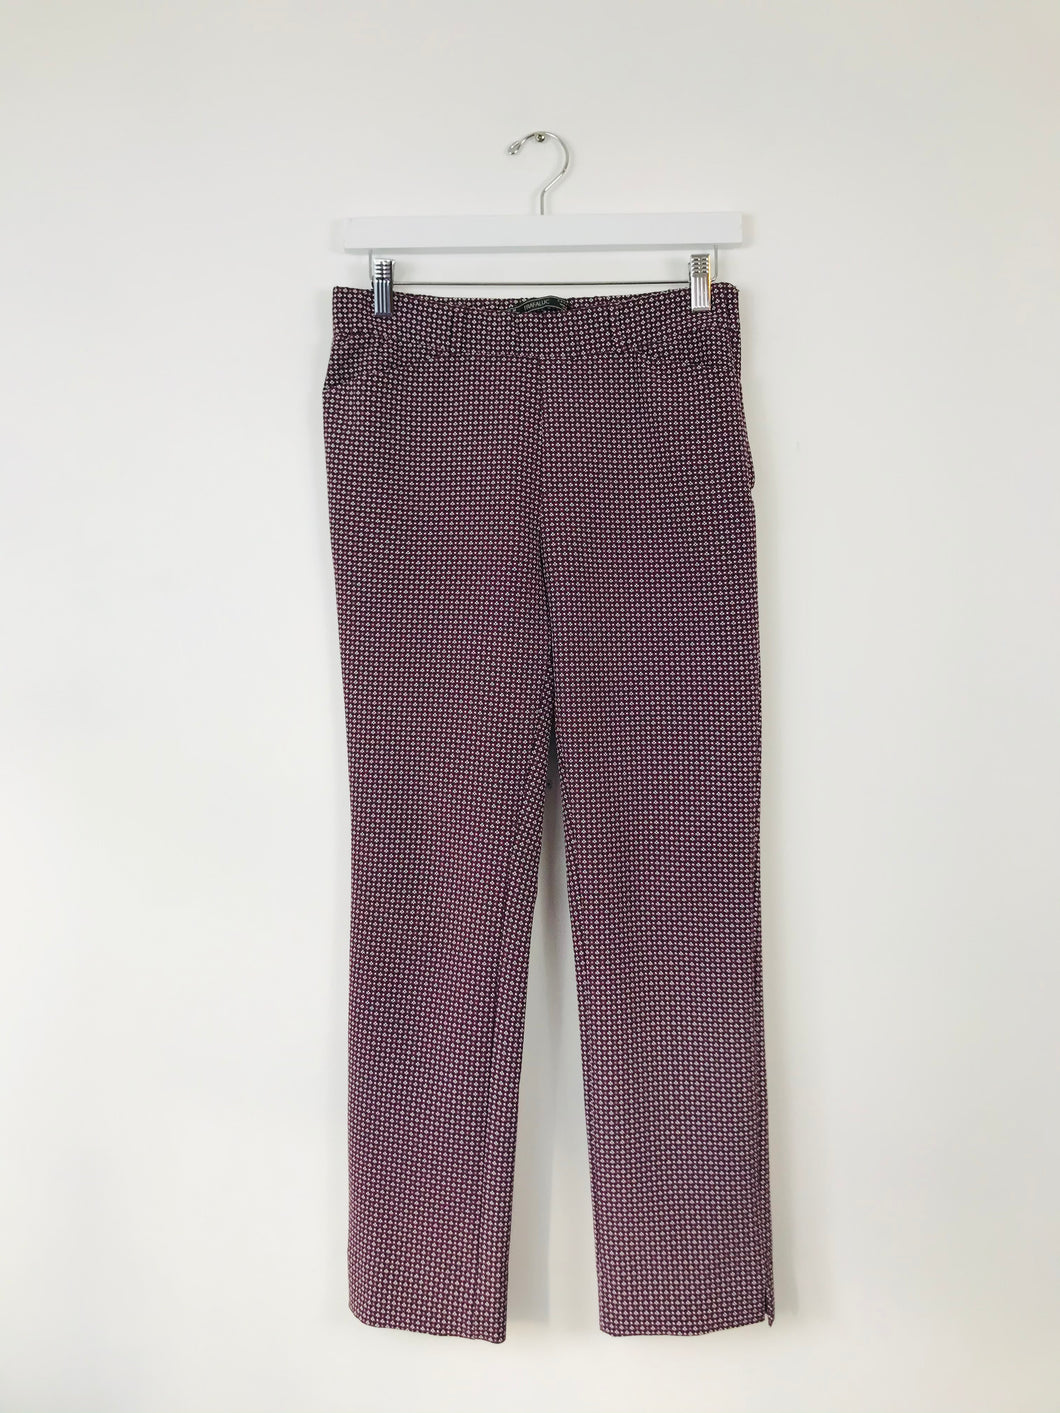 Zara Women’s Slim Fit Trousers | M | Burgundy Red